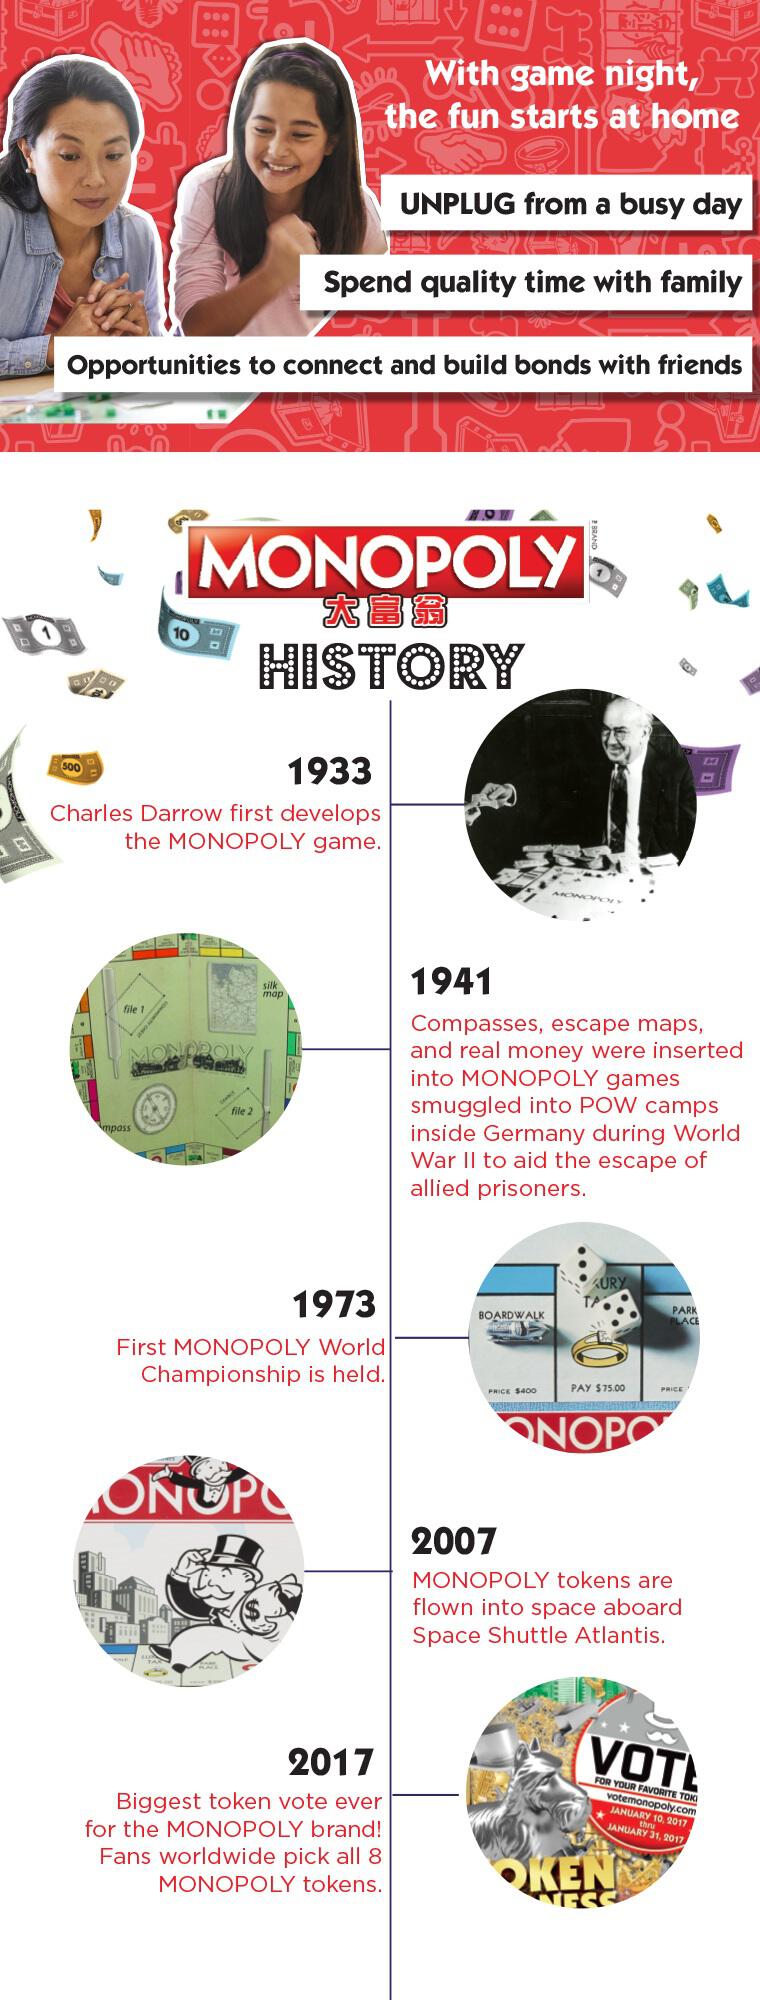 Monopoly - F. C. Porto, Toys R' Us